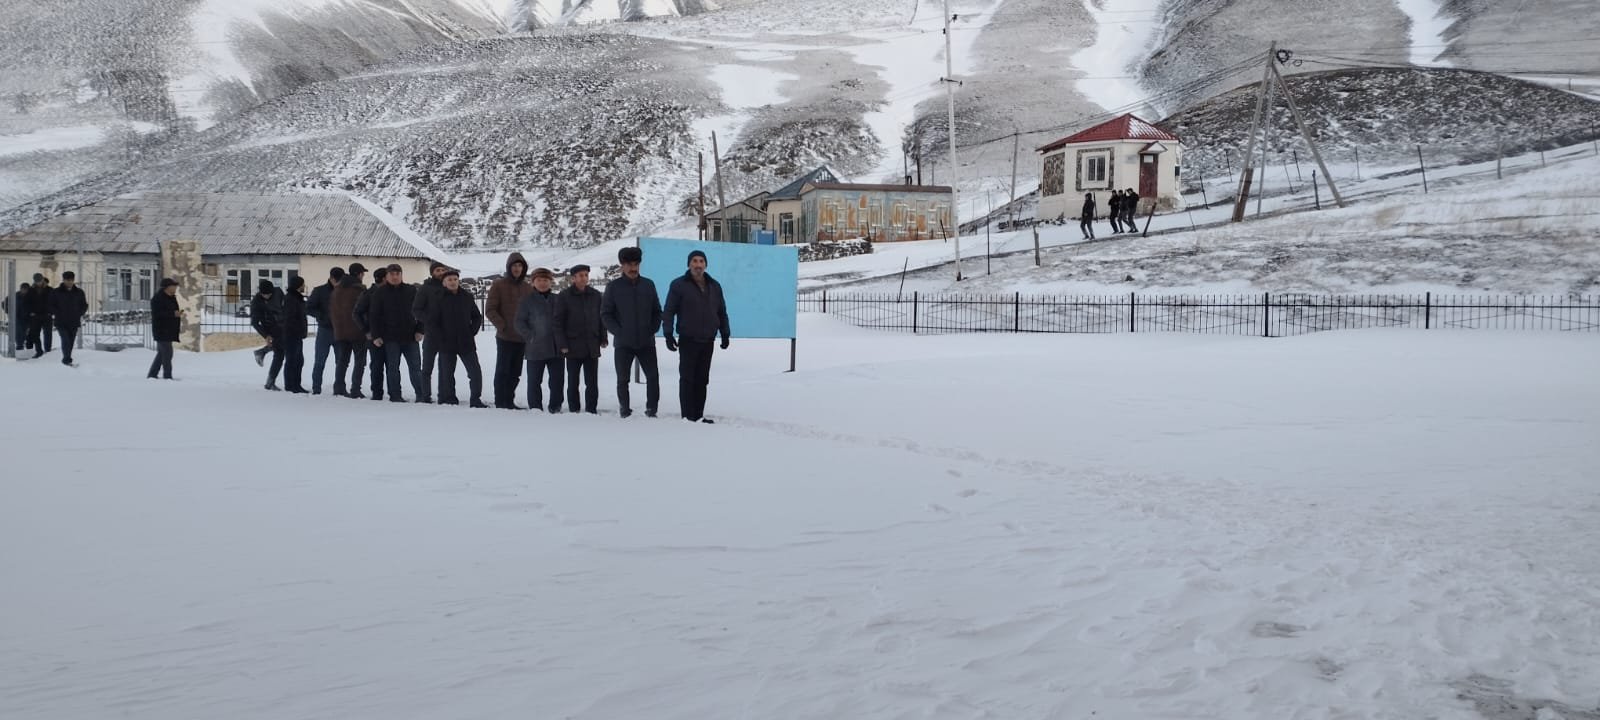 Khinalig village of Azerbaijan's Guba sees dynamic voter turnout (PHOTO)